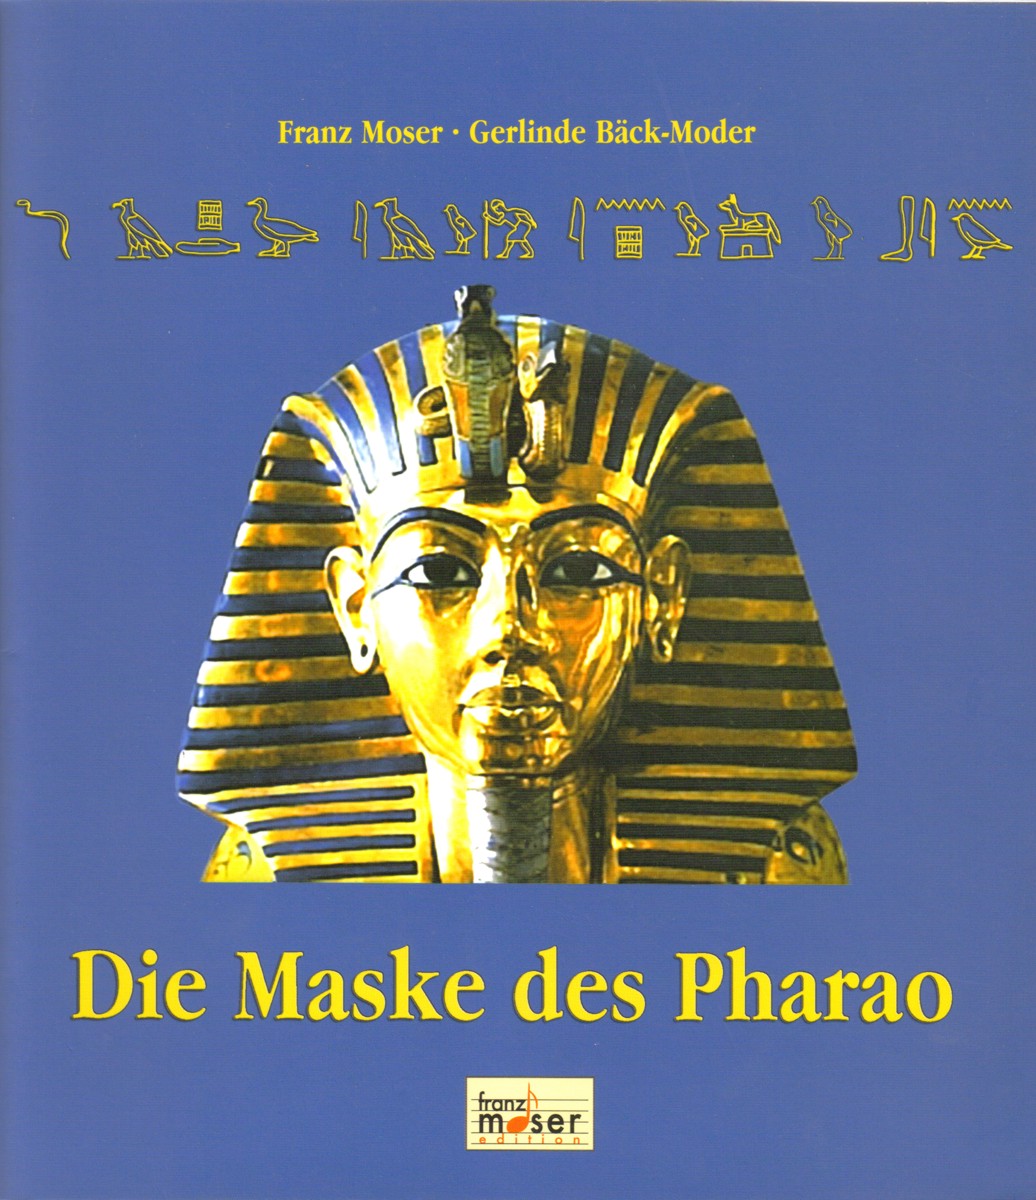 Maske des Pharao, Die - click here